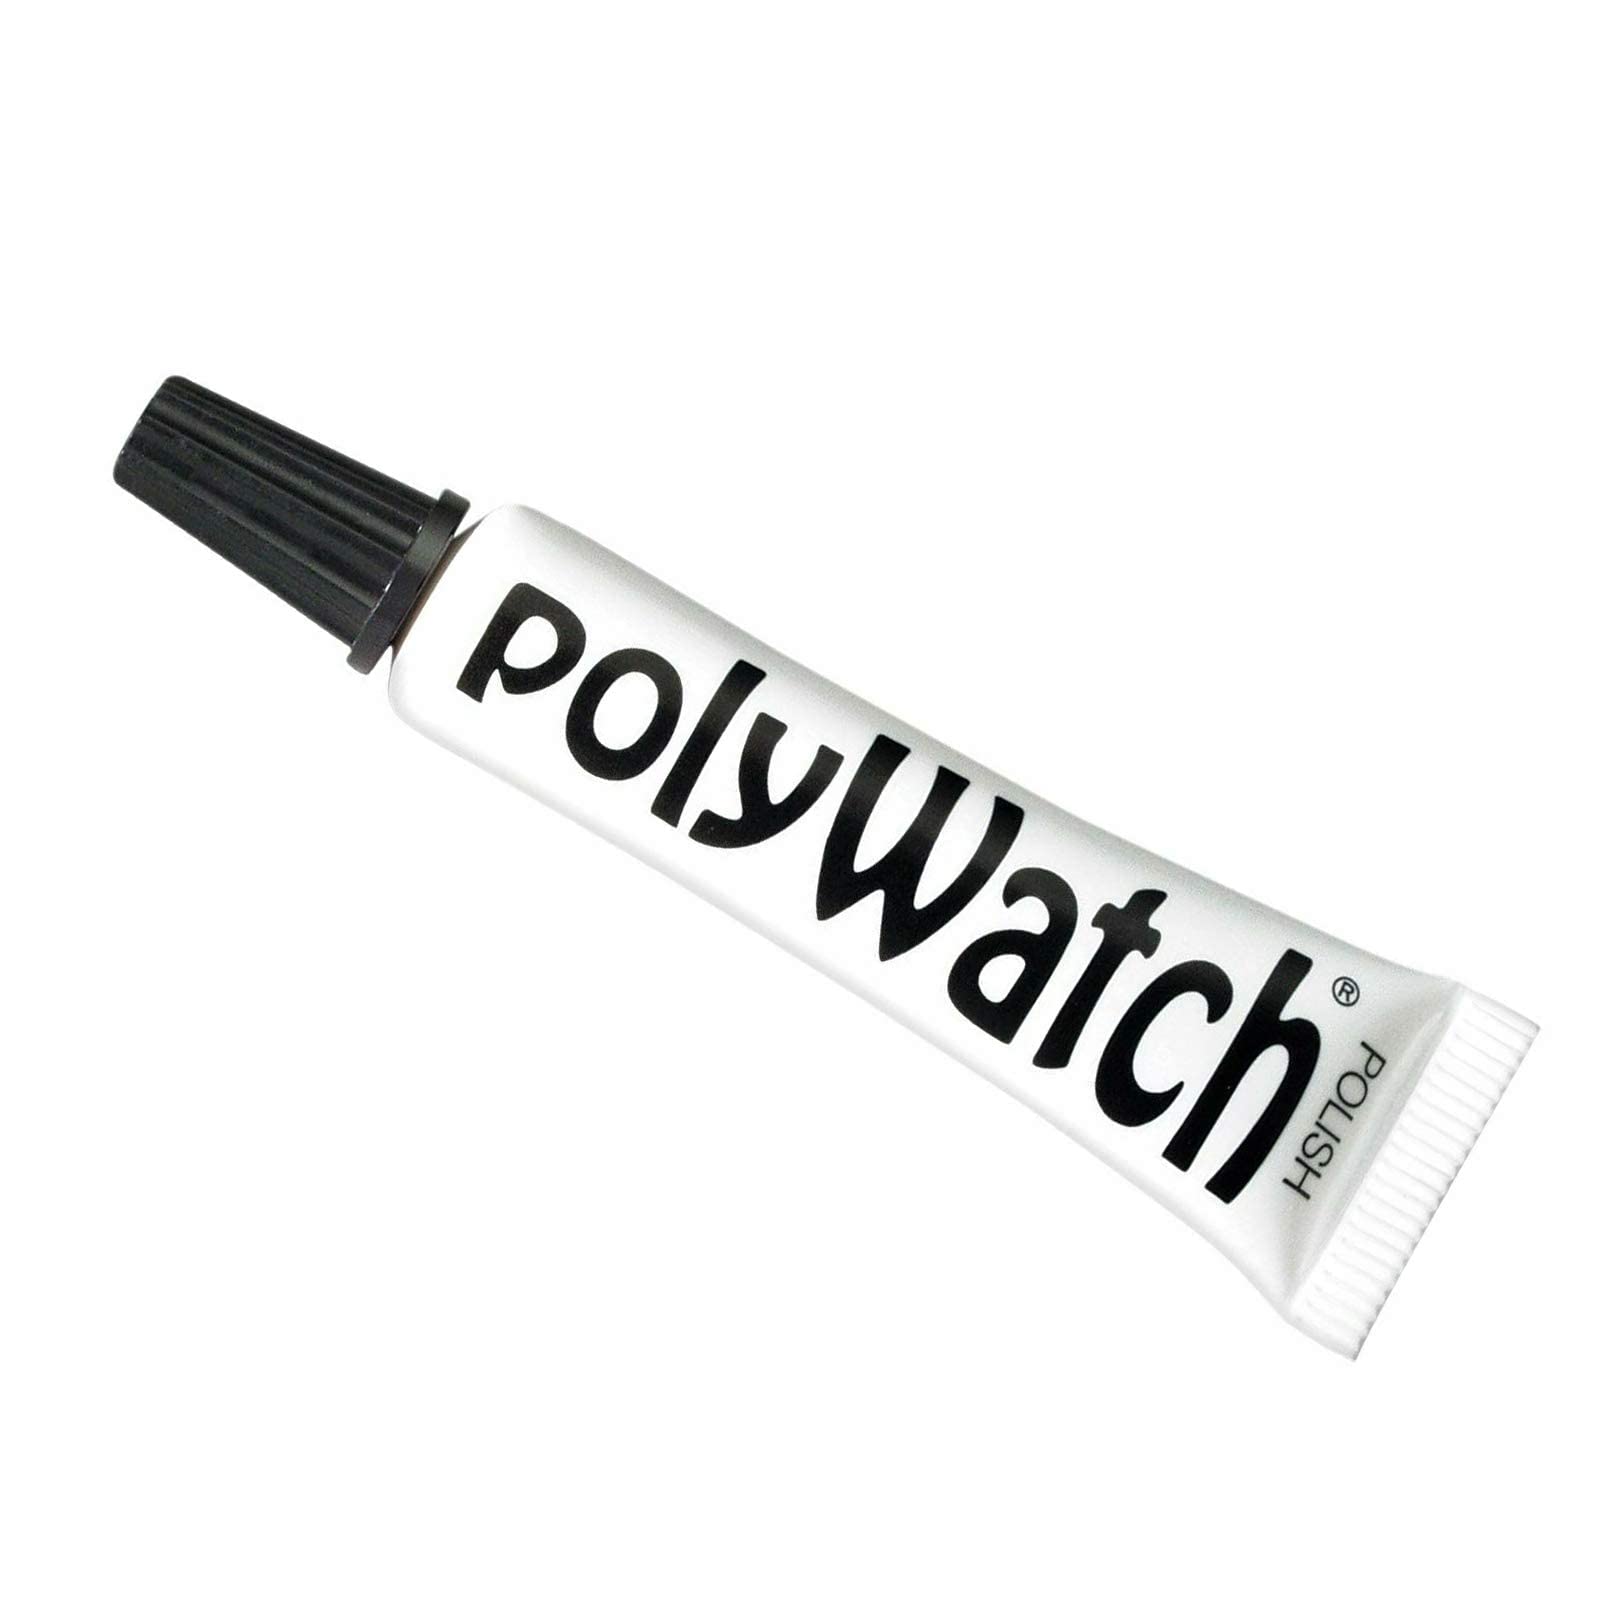 Polywatch Plastic Watch Crystal Scratch Remover String Buff Soft Polisher and Polishing Cloth